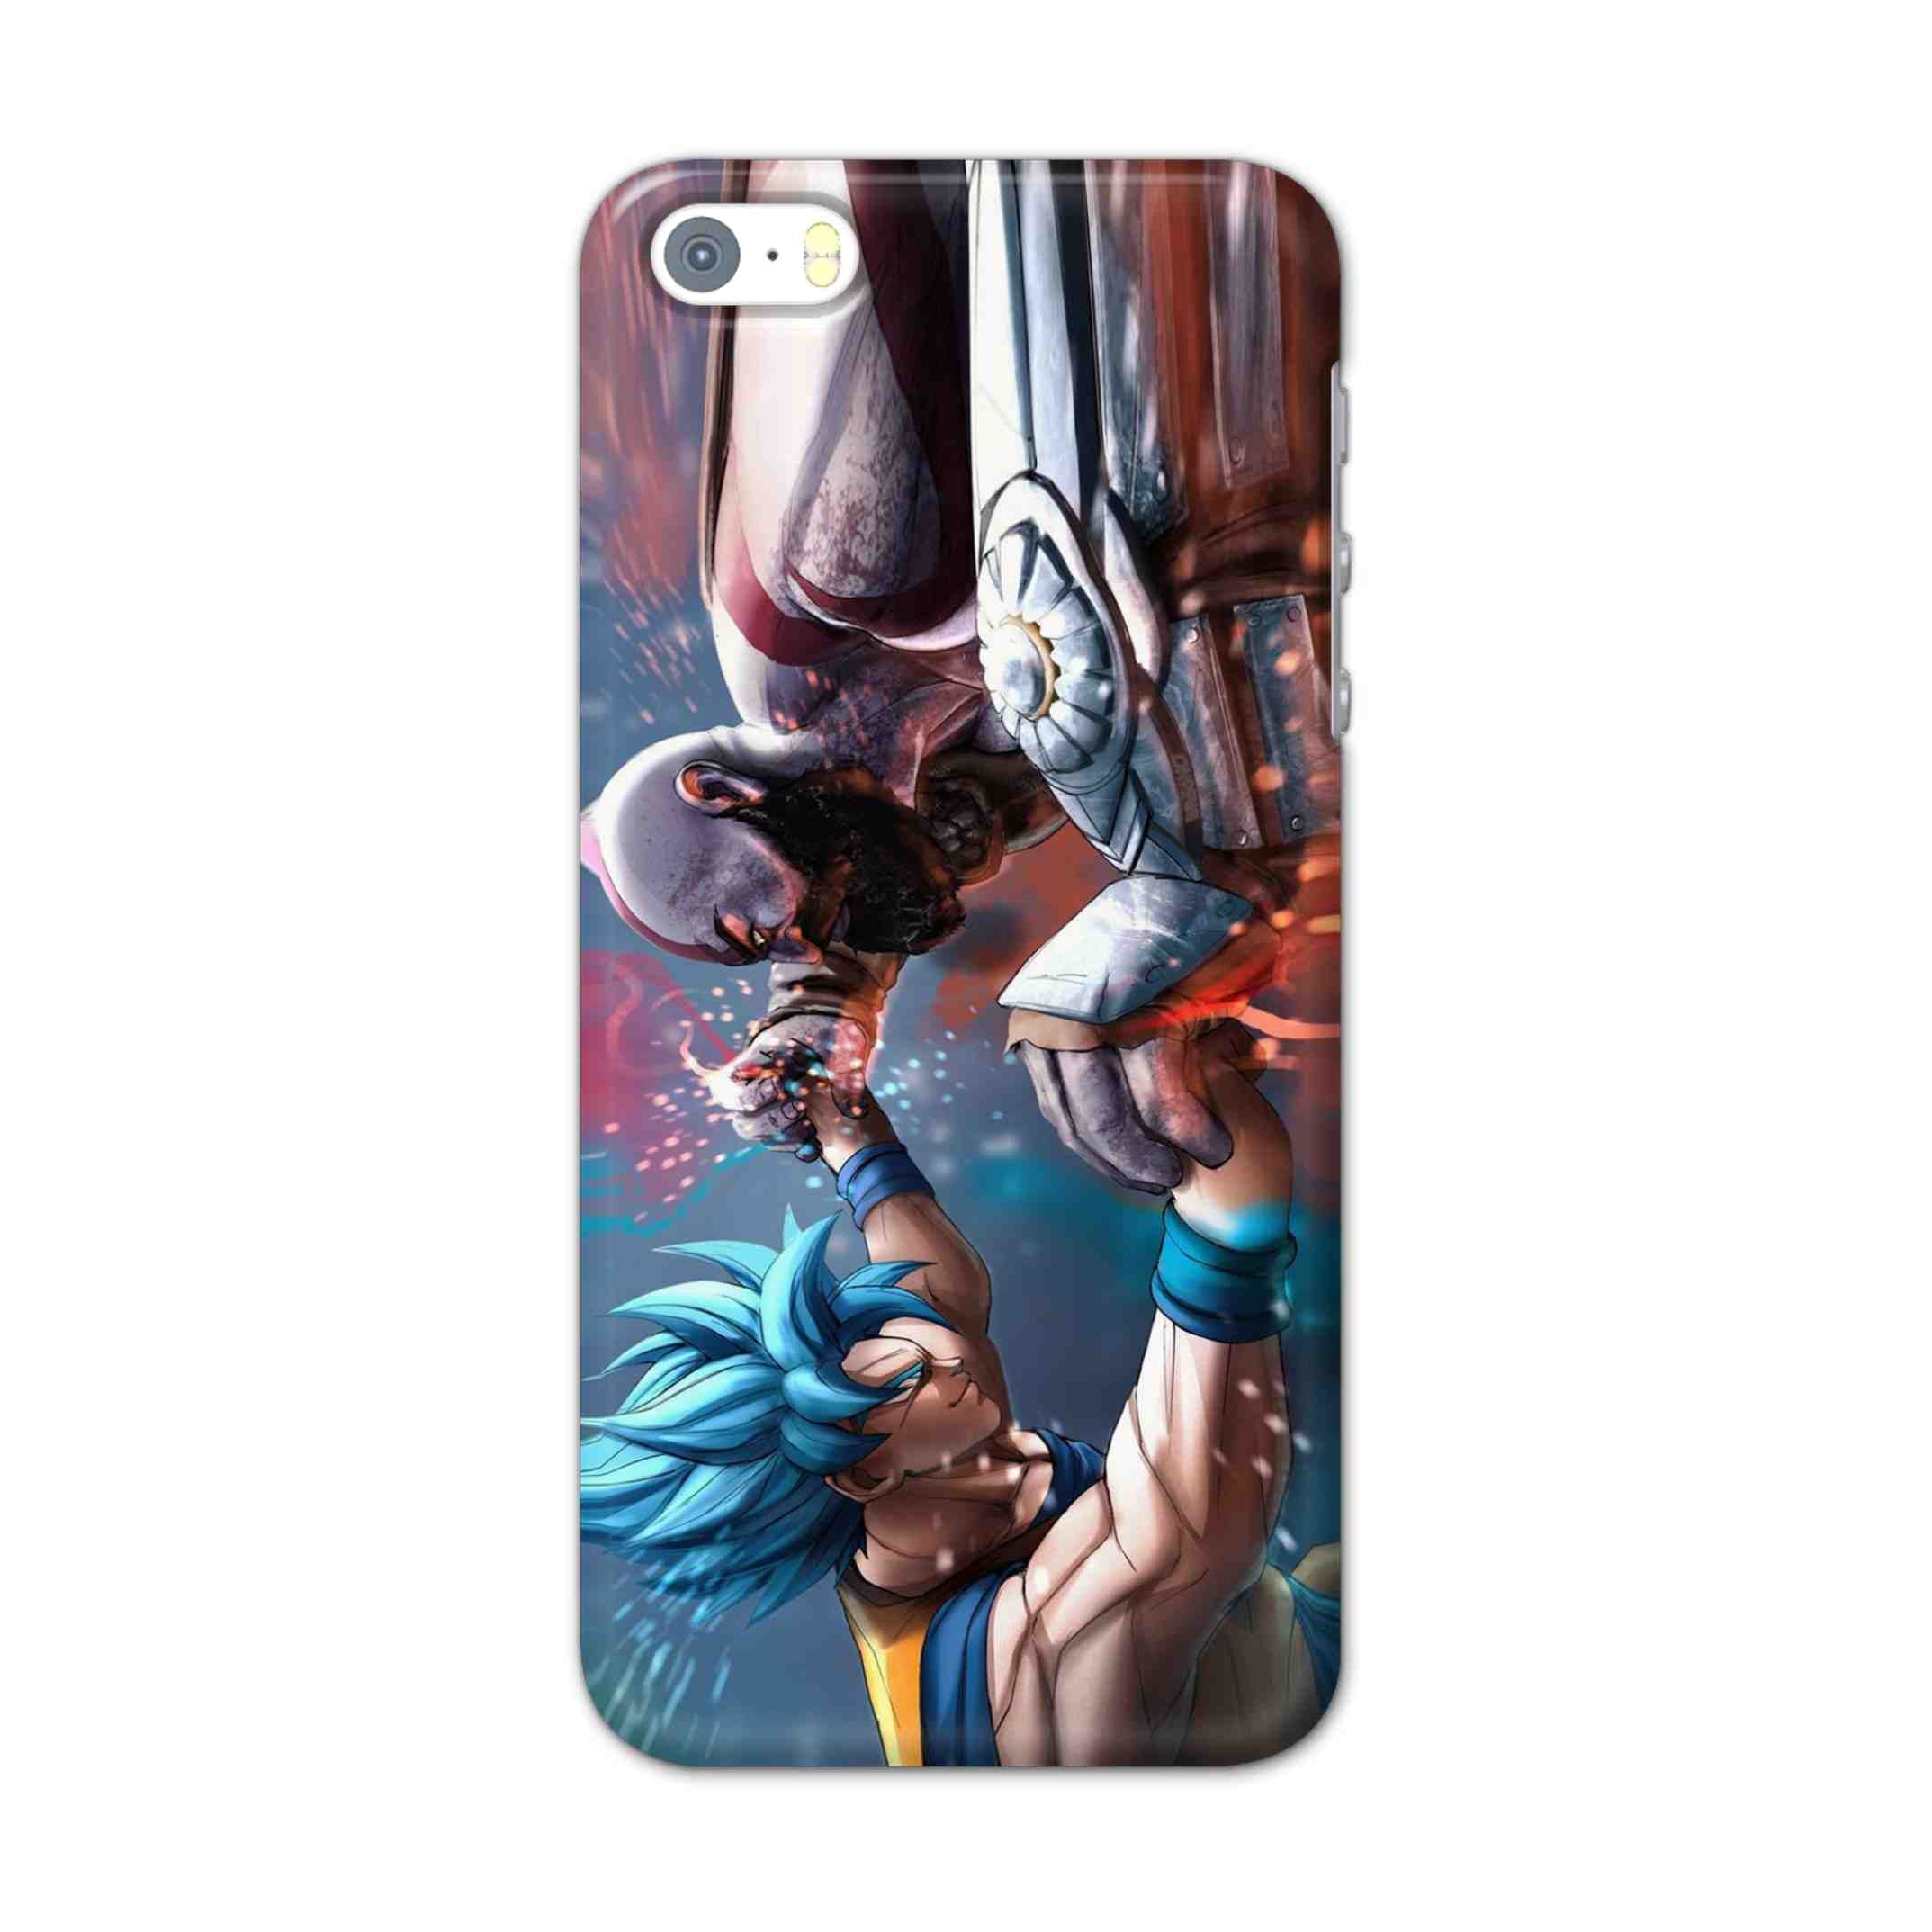 Buy Goku Vs Kratos Hard Back Mobile Phone Case/Cover For Apple Iphone SE Online